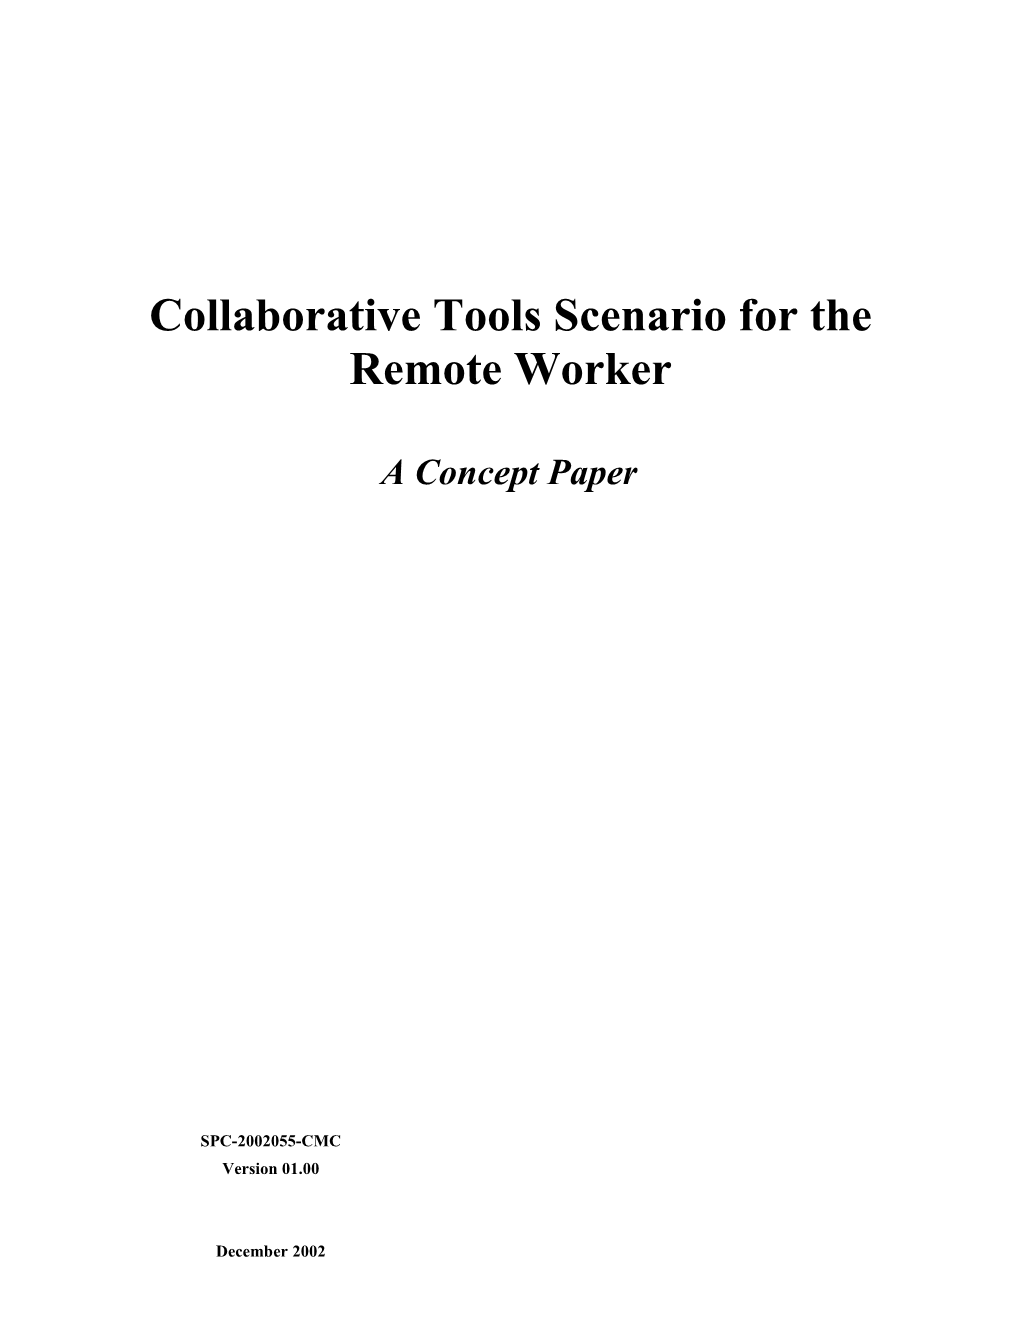 Collaborative Tools Scenarios for the Remote Worker